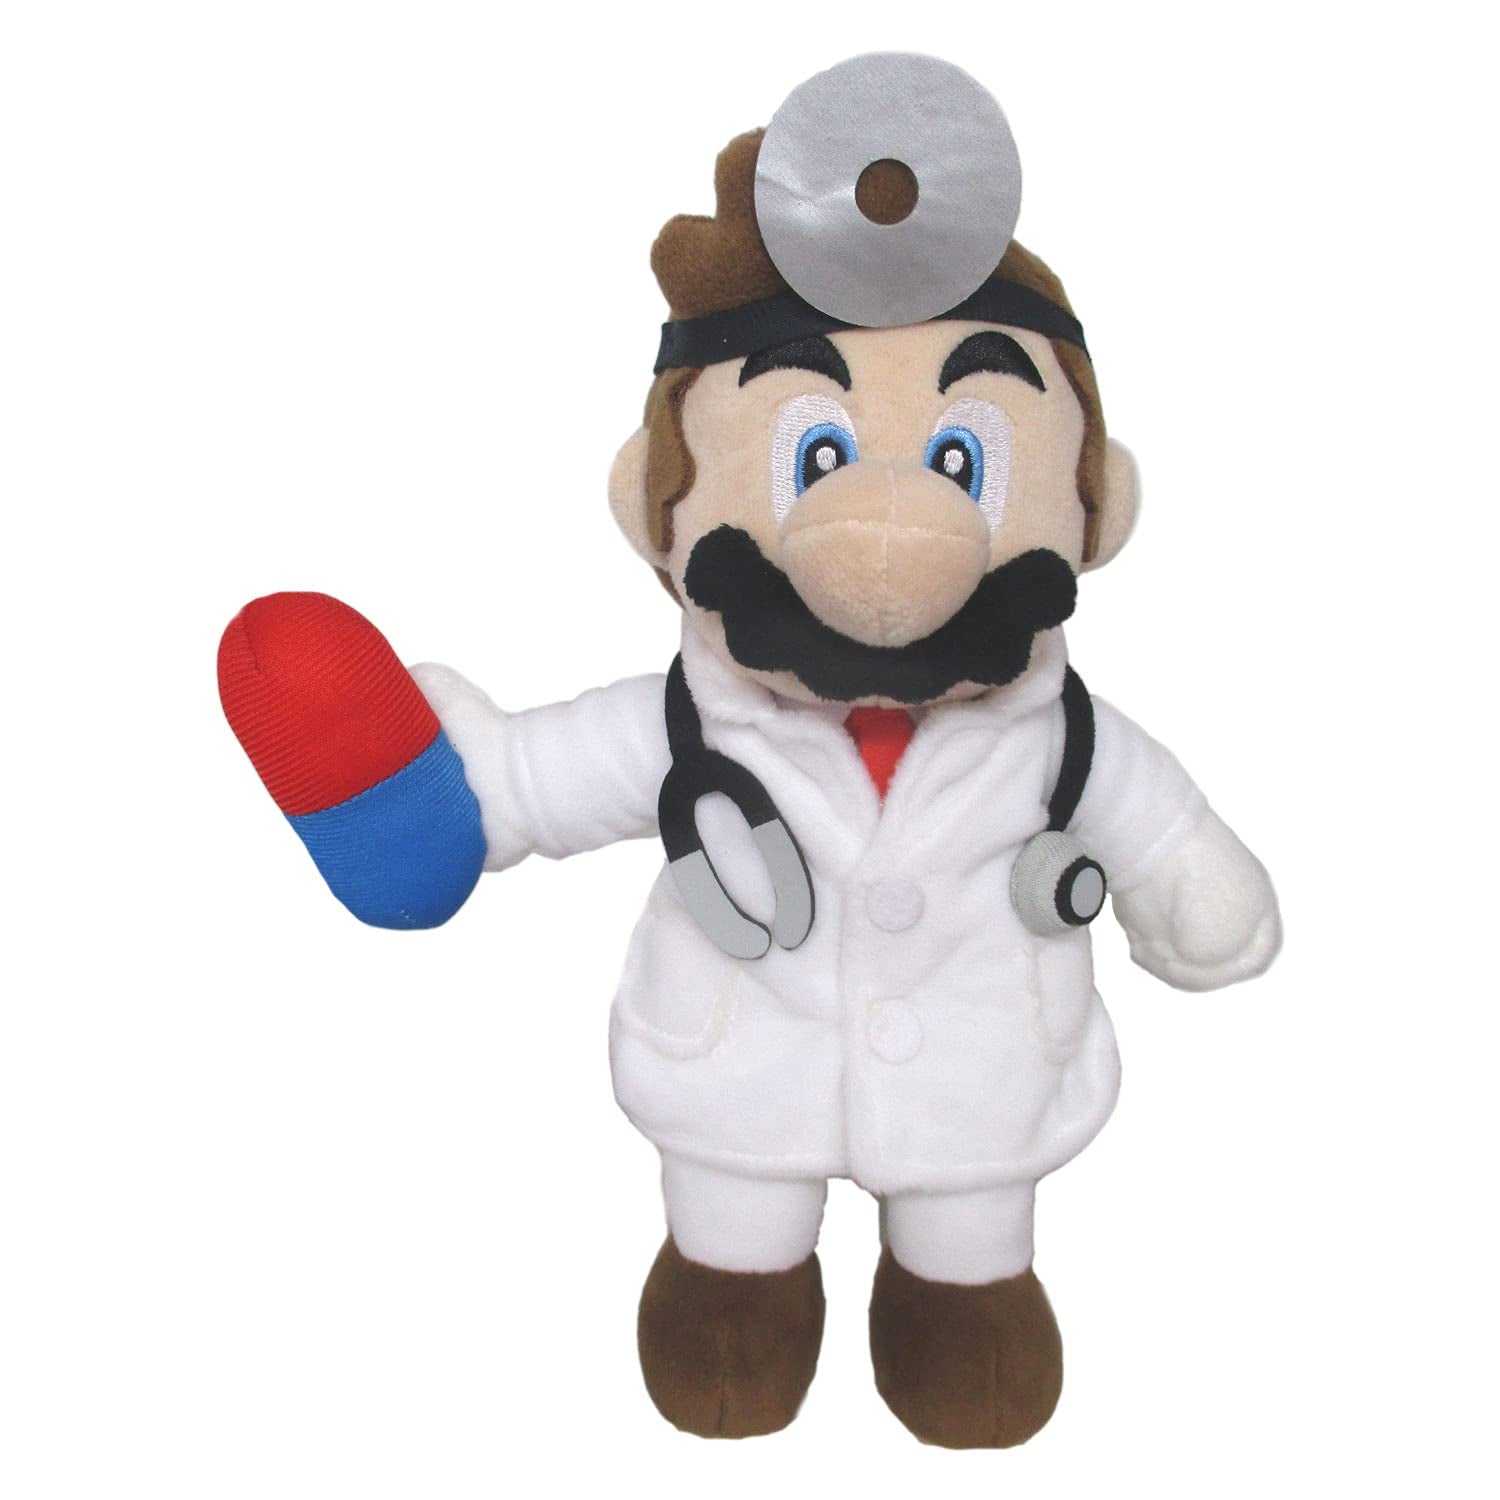 Little Buddy 1824 Dr. Mario World